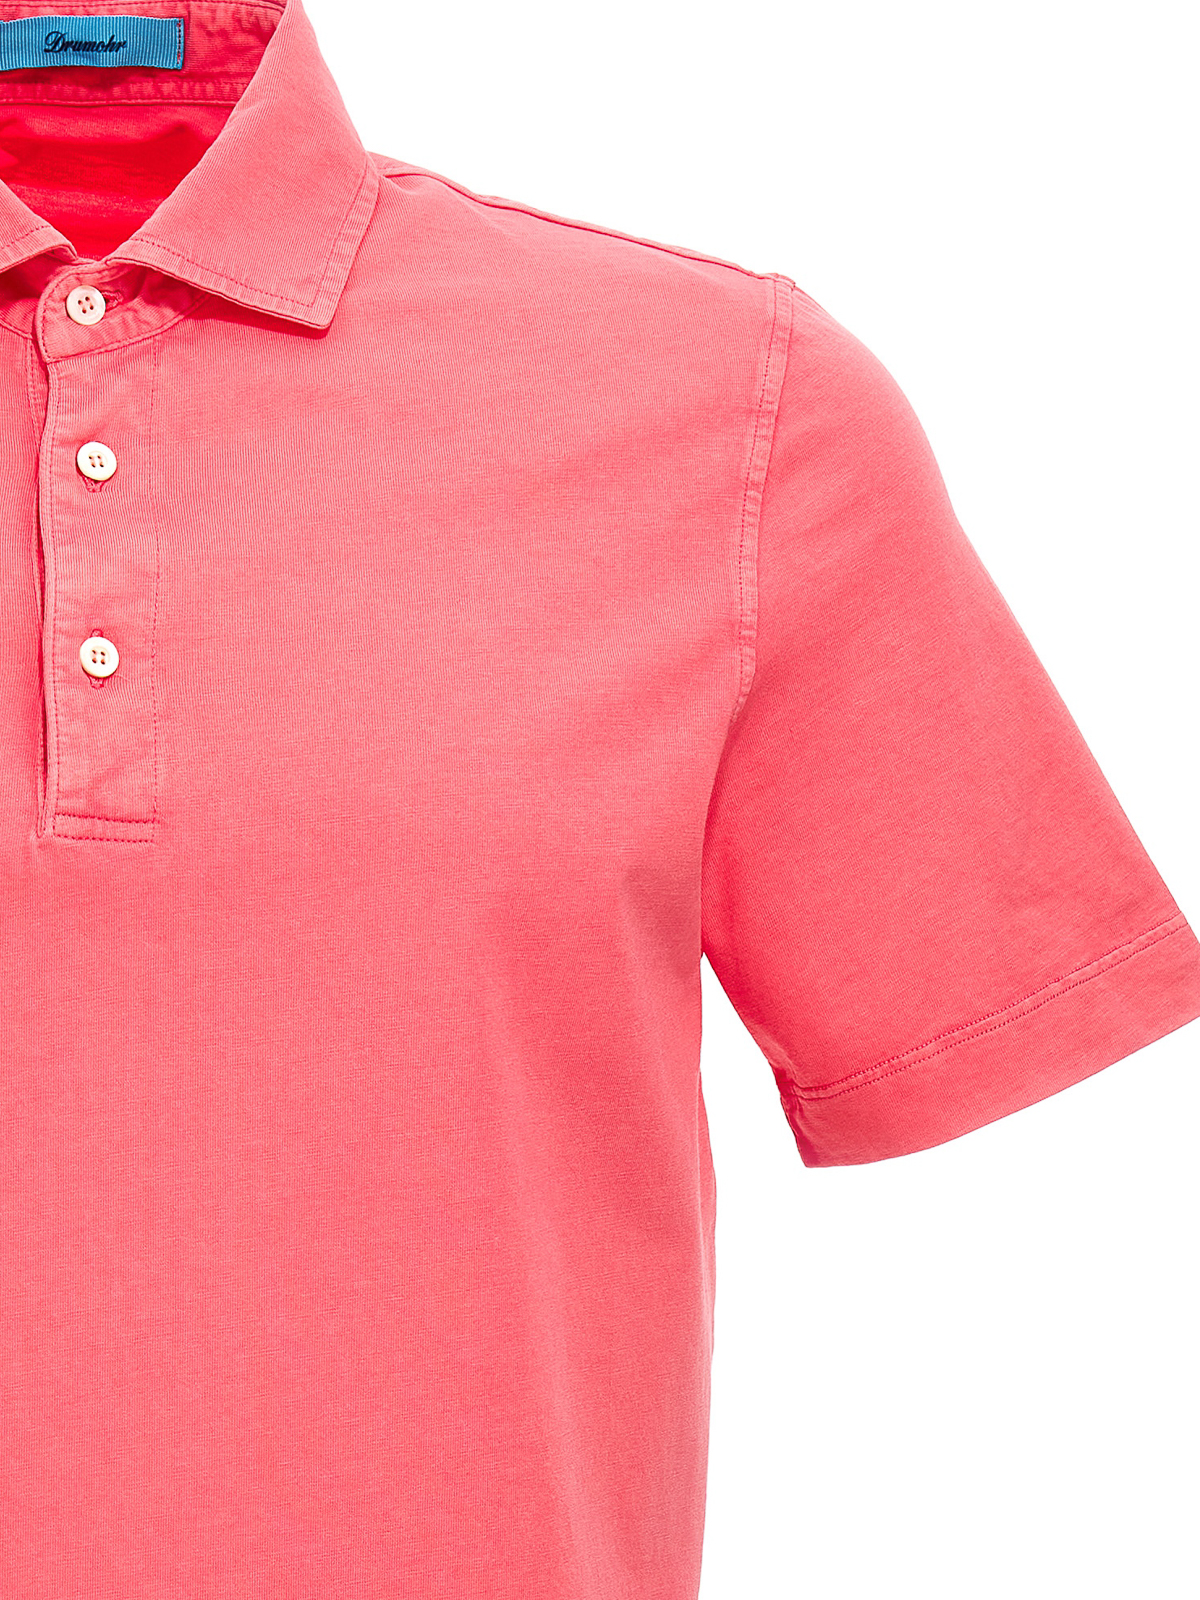 Shop Drumohr Light Cotton Polo Shirt. In Multicolour